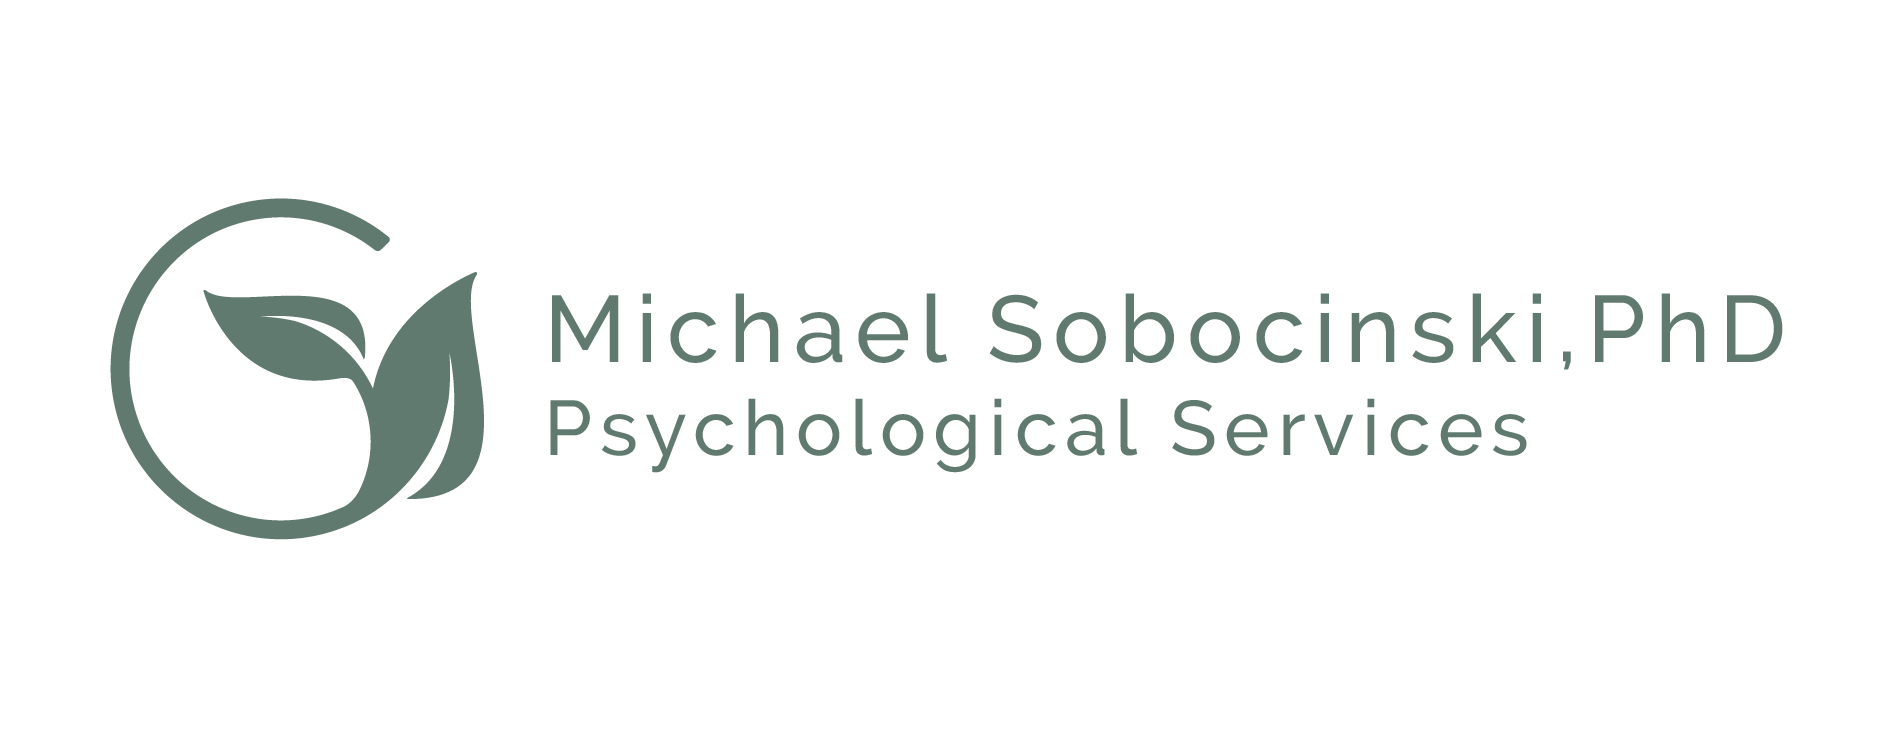 Michael Sobocinski, PhD  Psychological Services